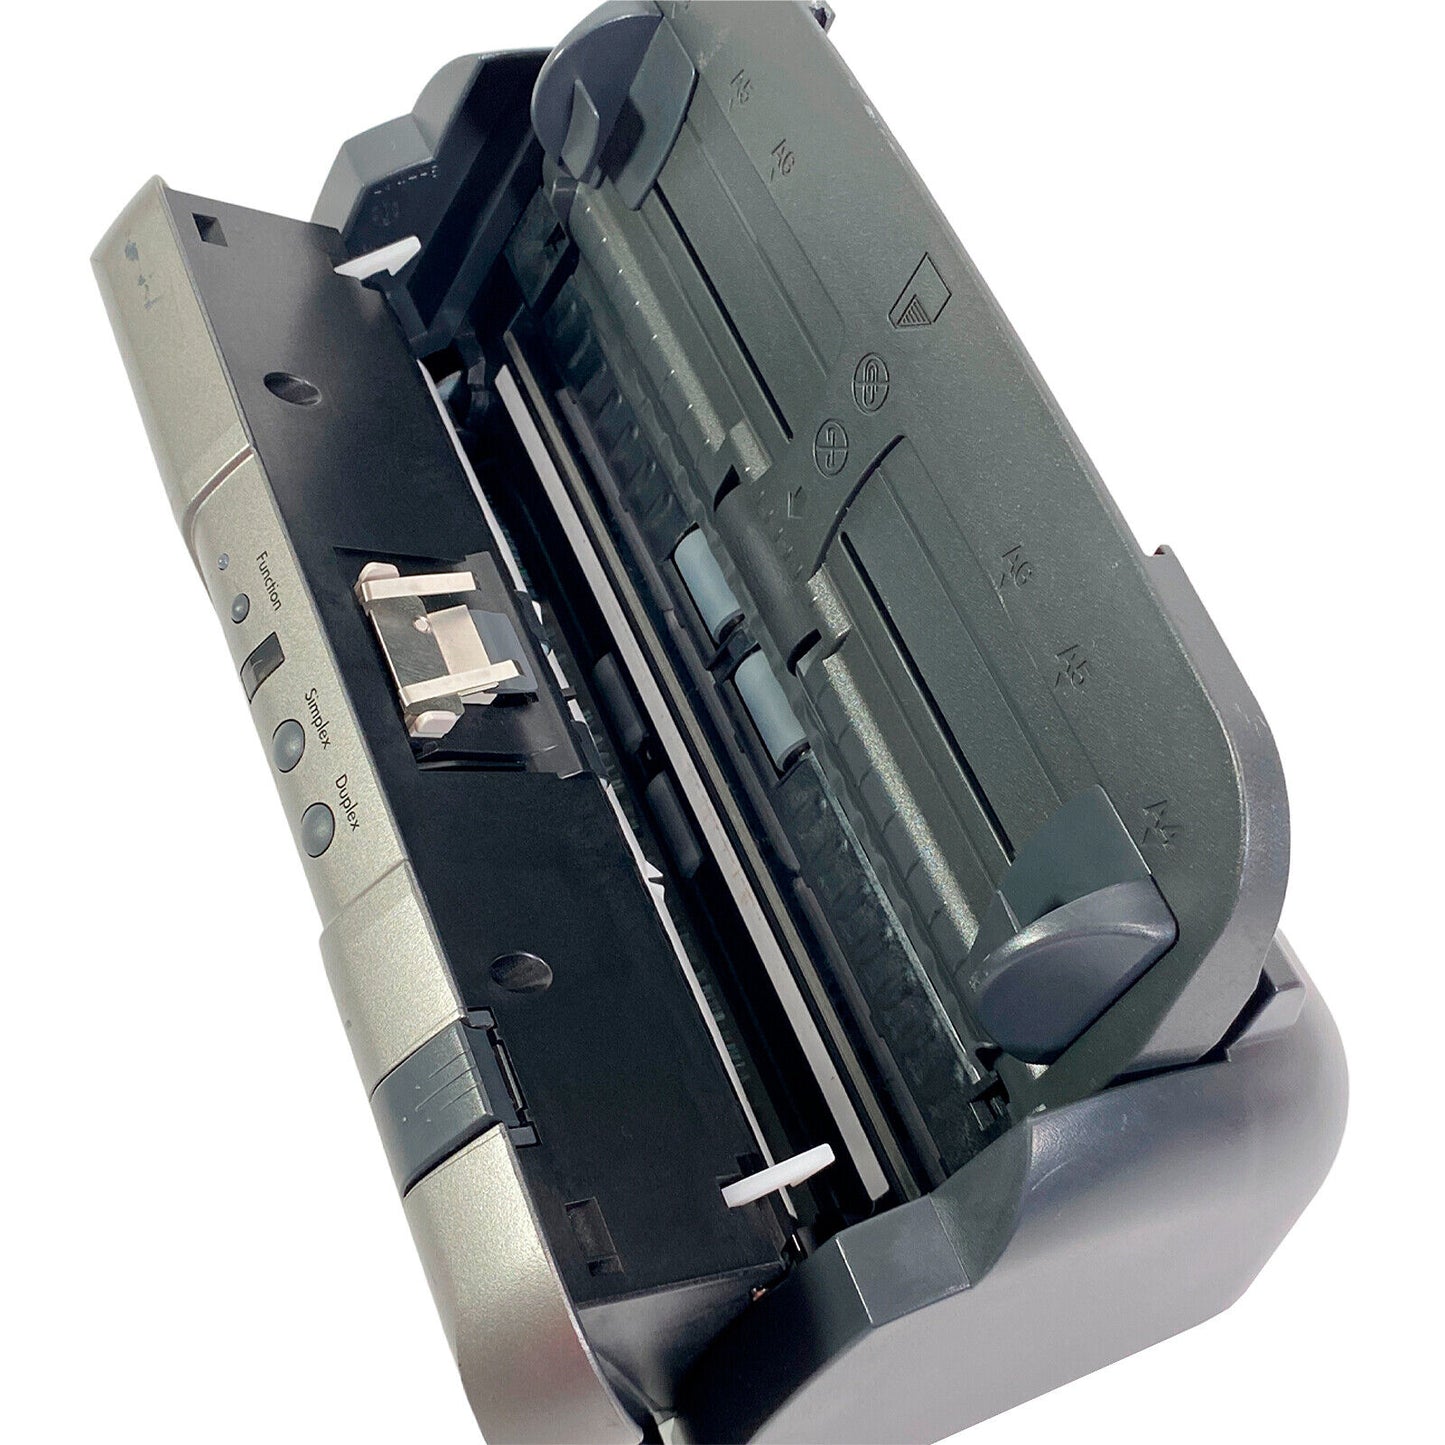 Xerox DocuMate 152 Compact Duplex ADF Document Scanner w/ AC Adapter NO Trays